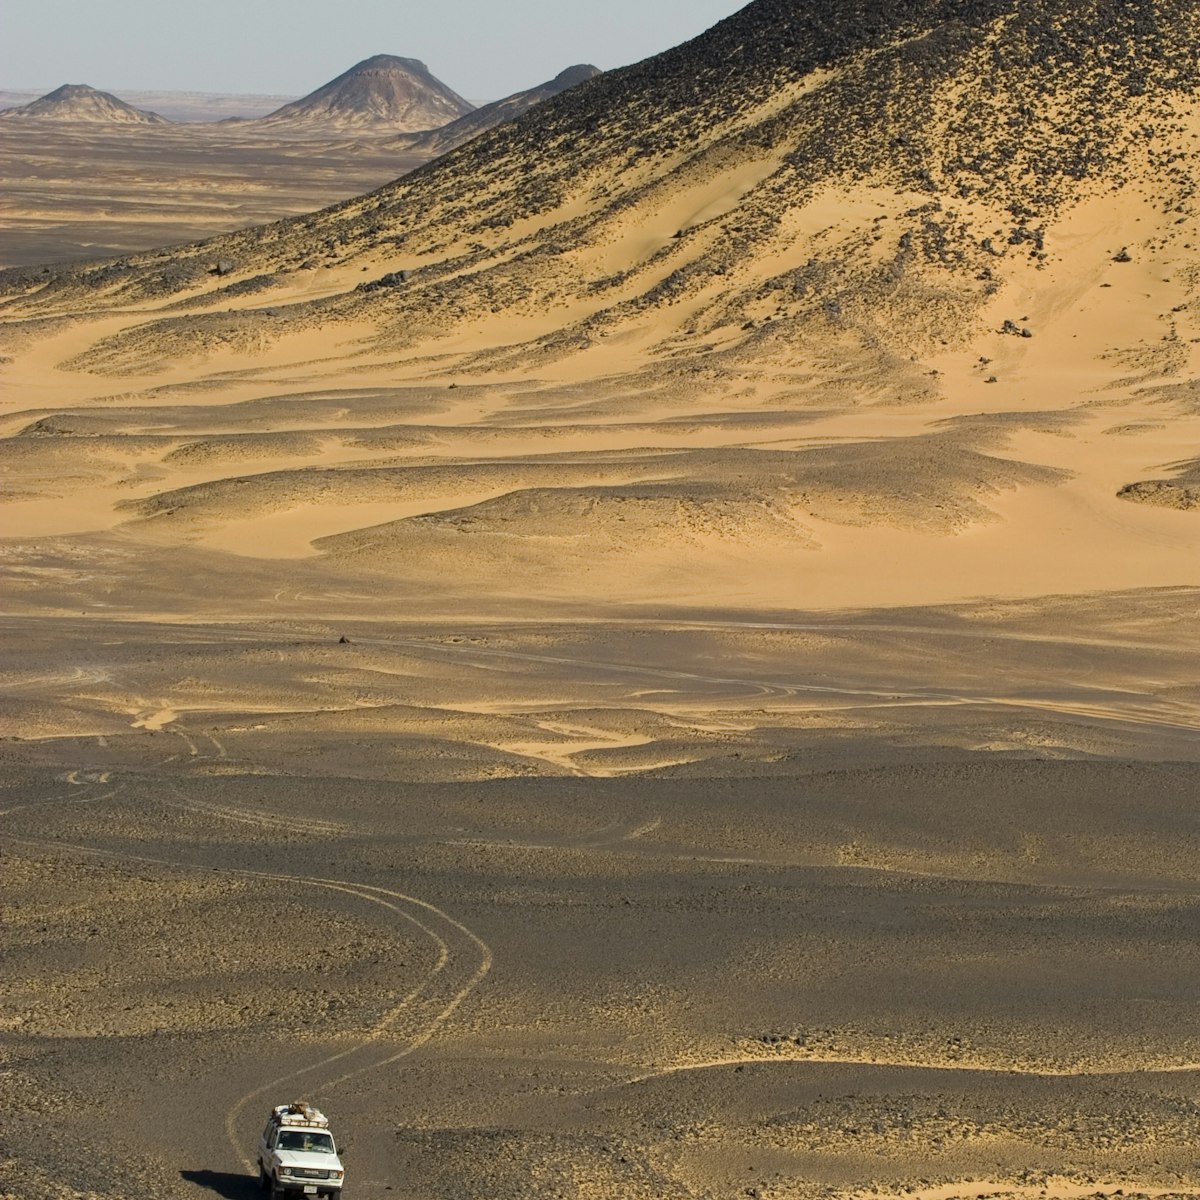 A 4x4 drives through the black desert in Egypt.